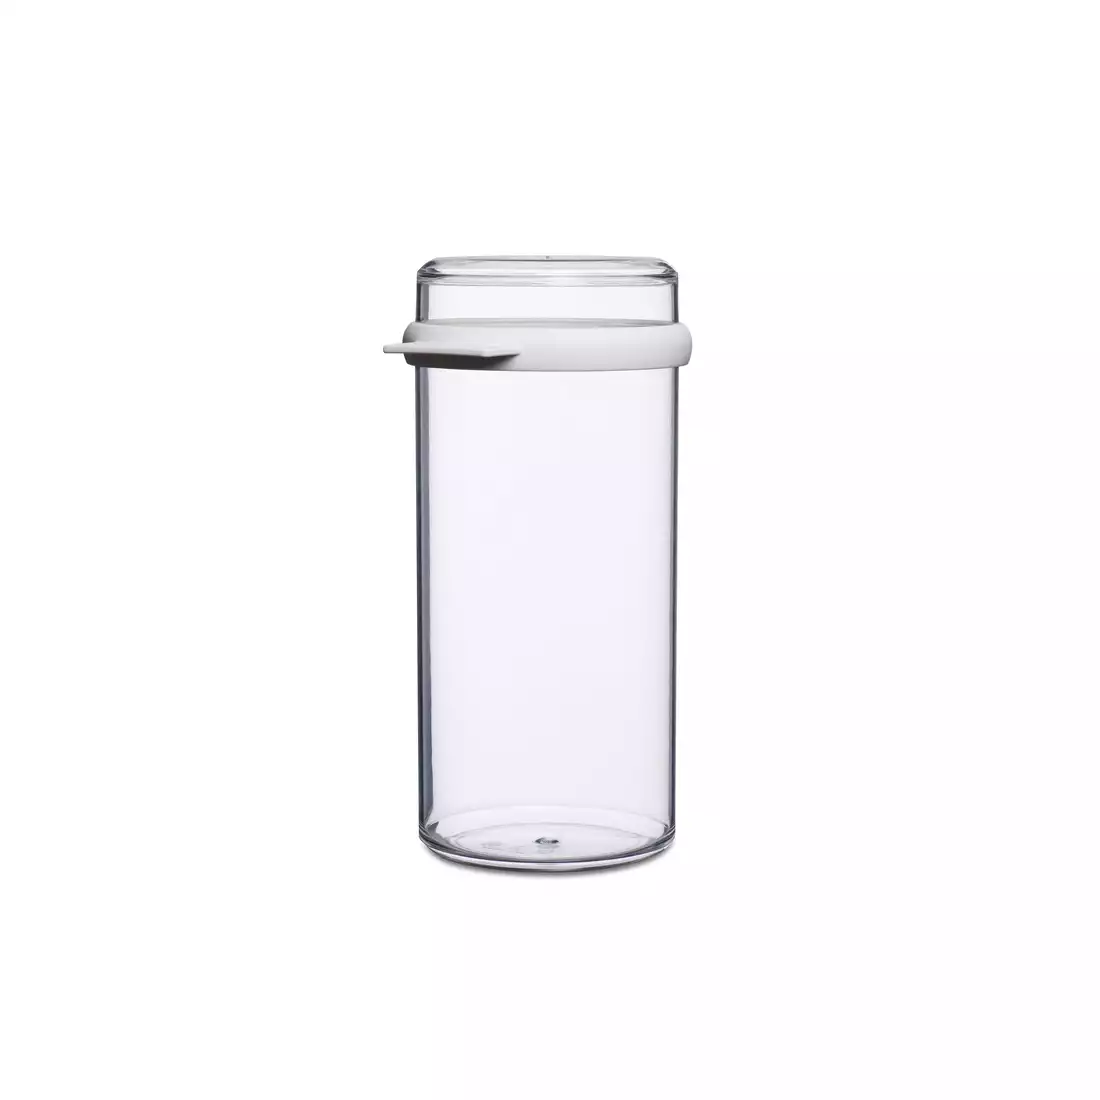 MEPAL STORA food container 1900 ml, white